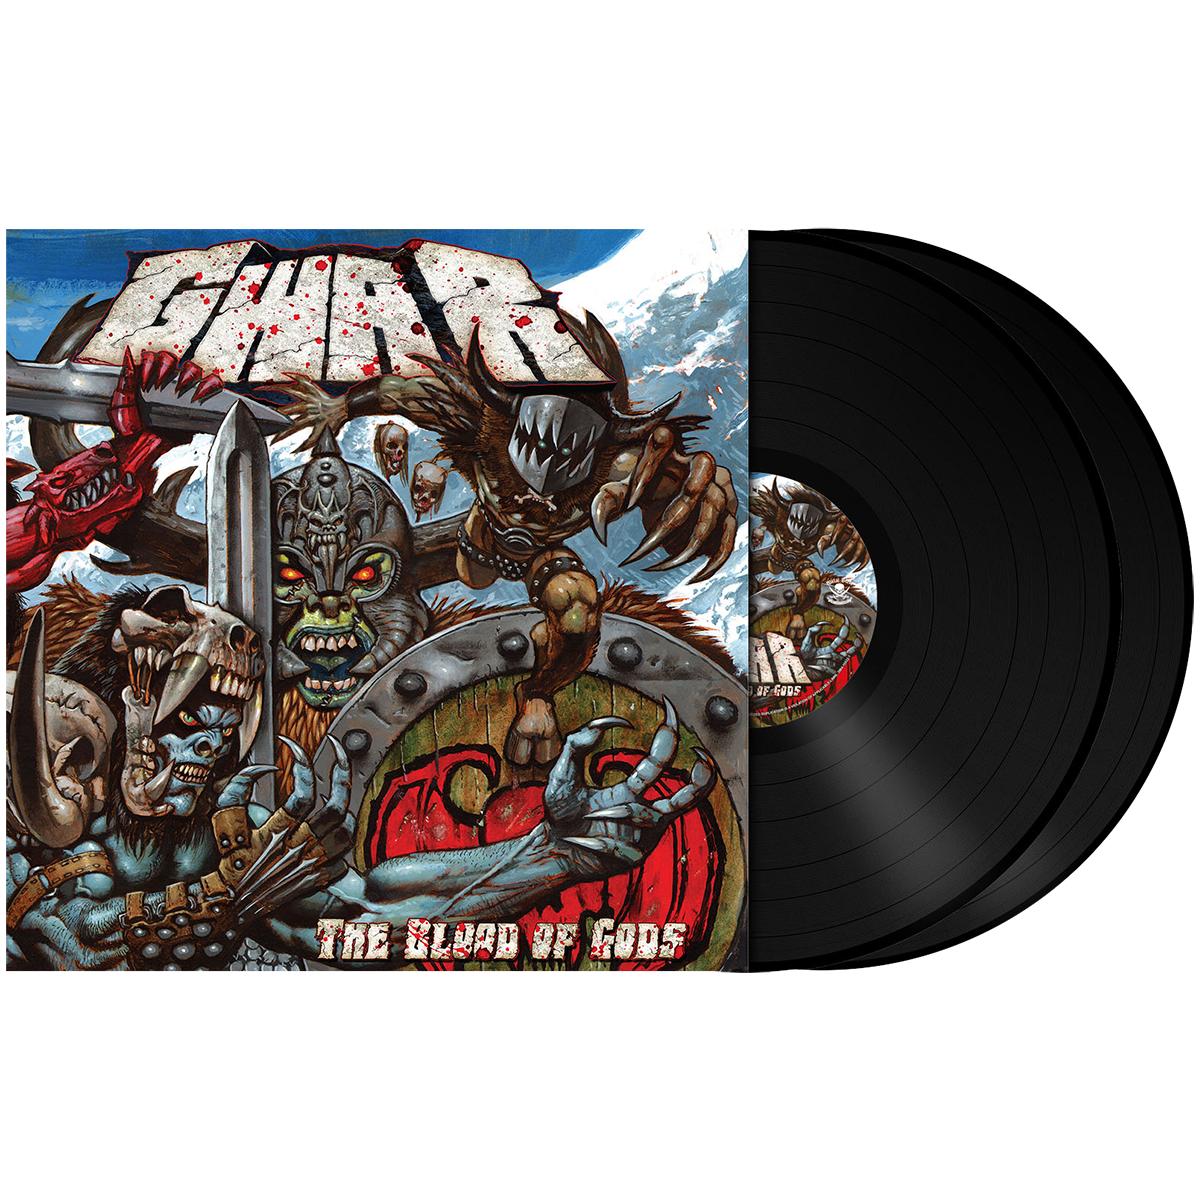 GWAR "The Blood Of Gods" Gatefold 2x12" Black Vinyl